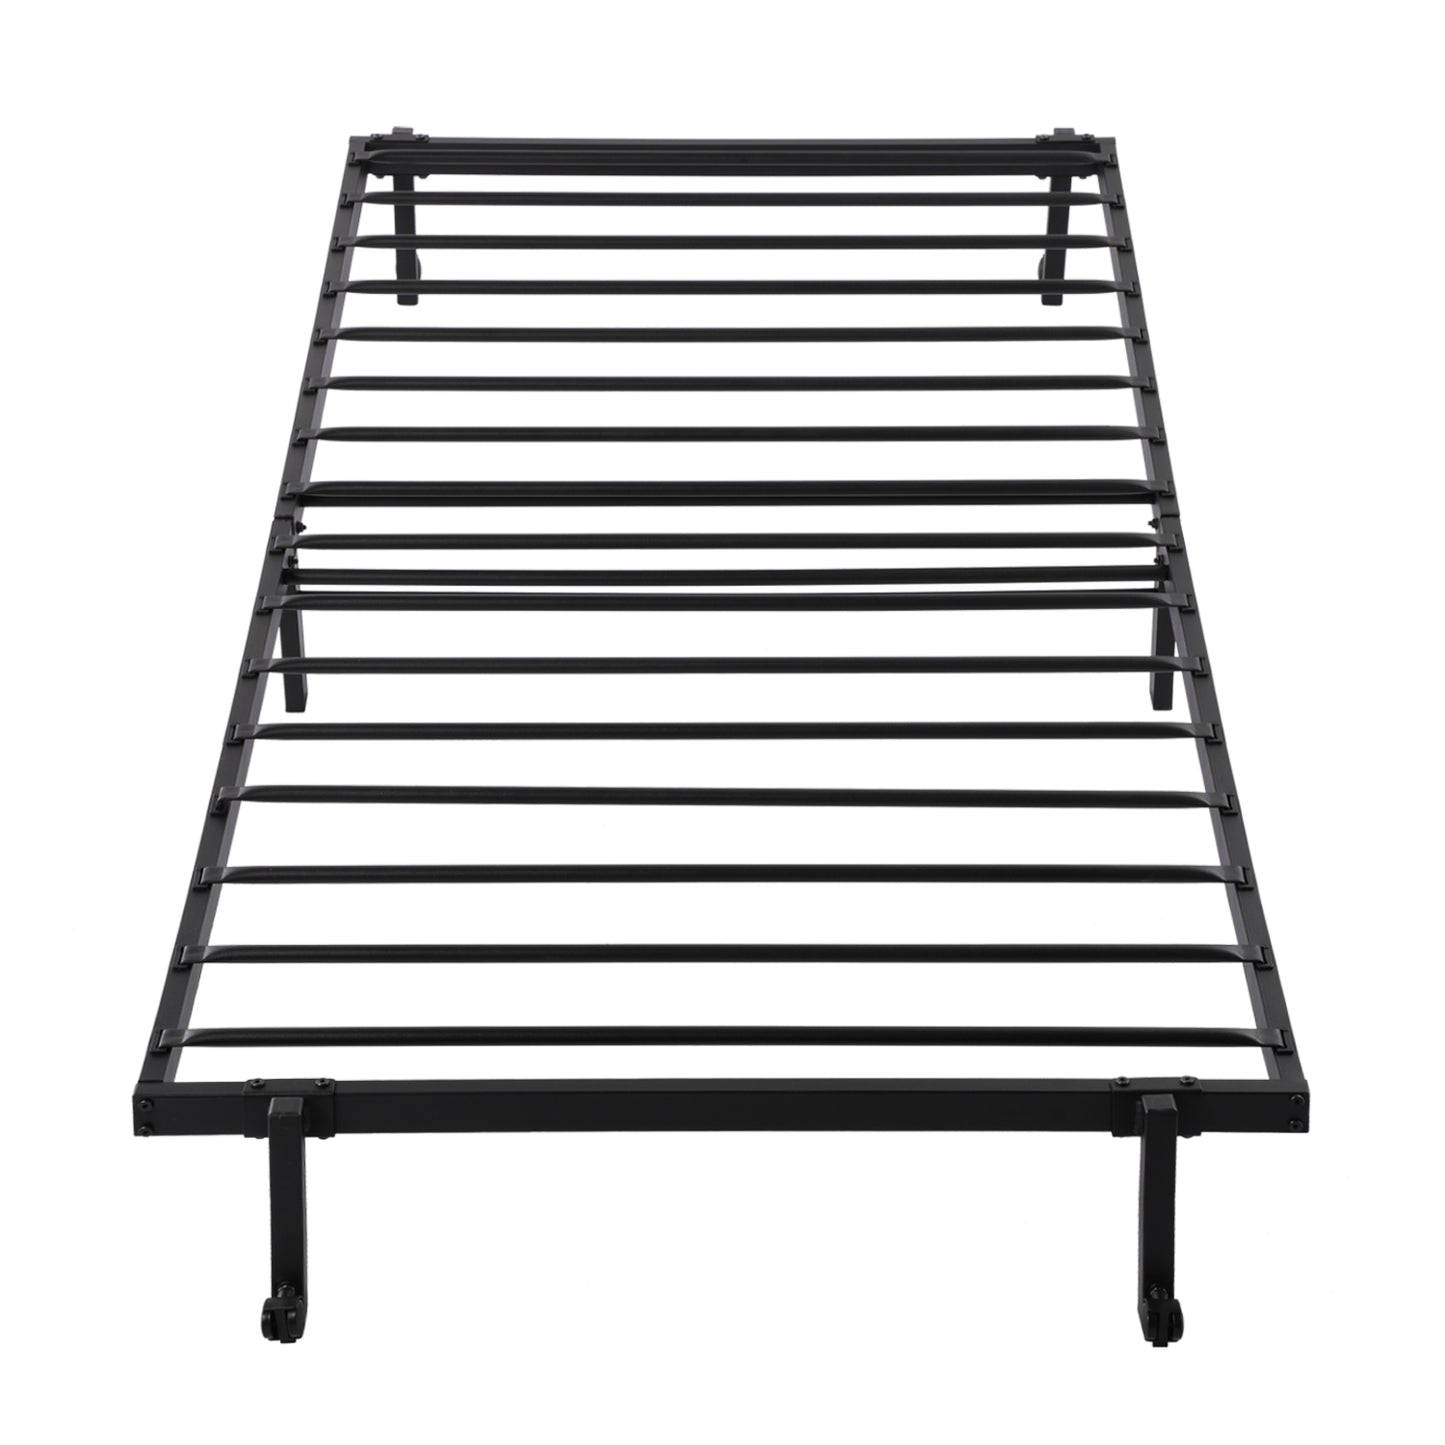 LIA Single Metal Bed 92*190cm - Black